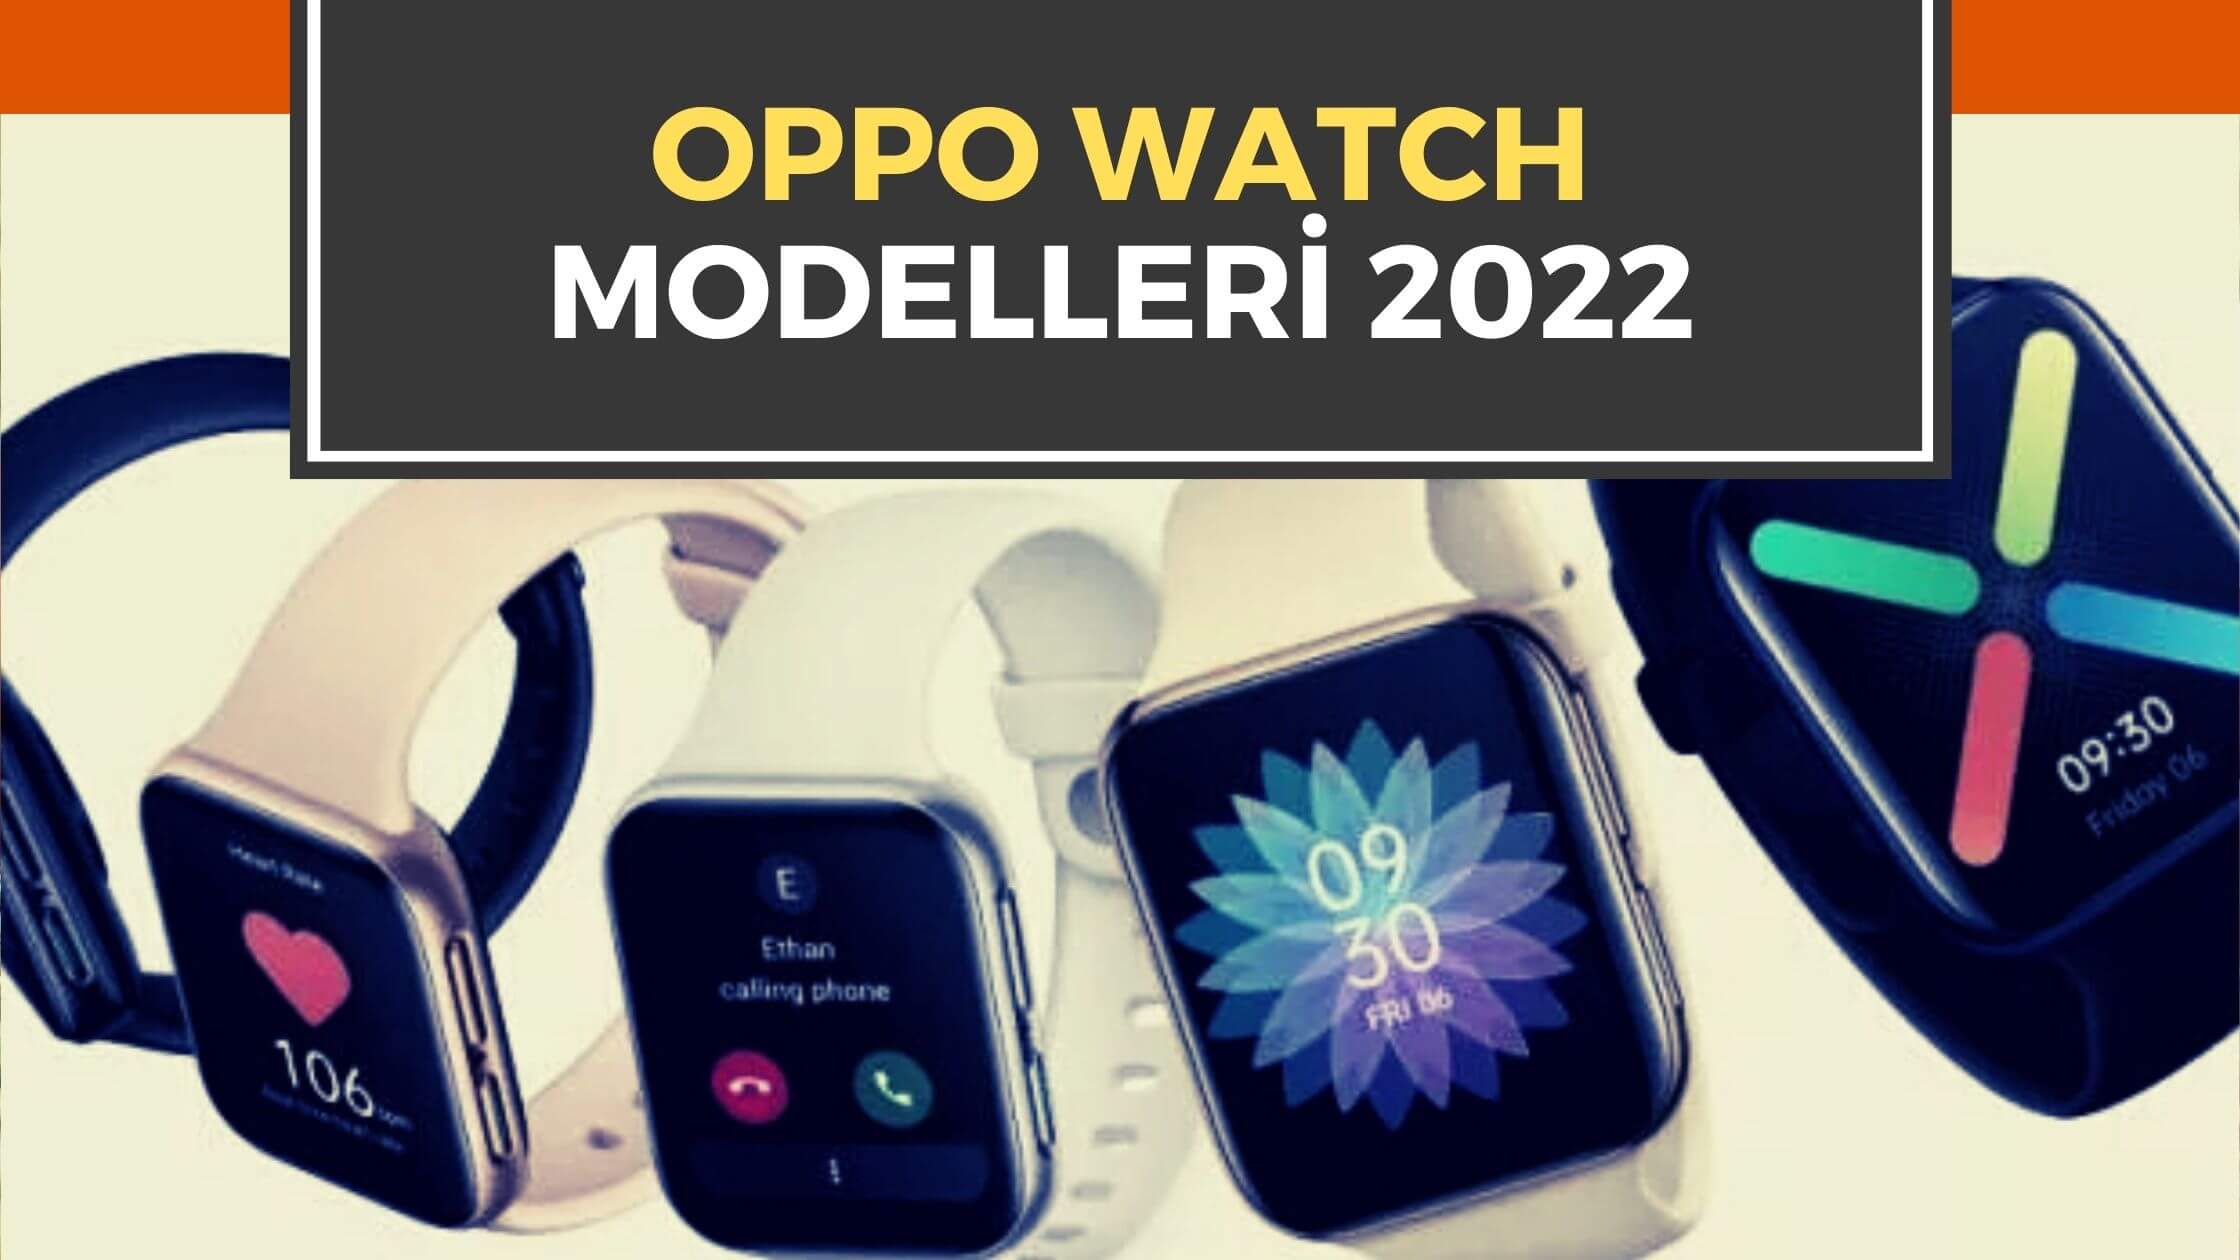 Oppo Watch Modelleri 2022